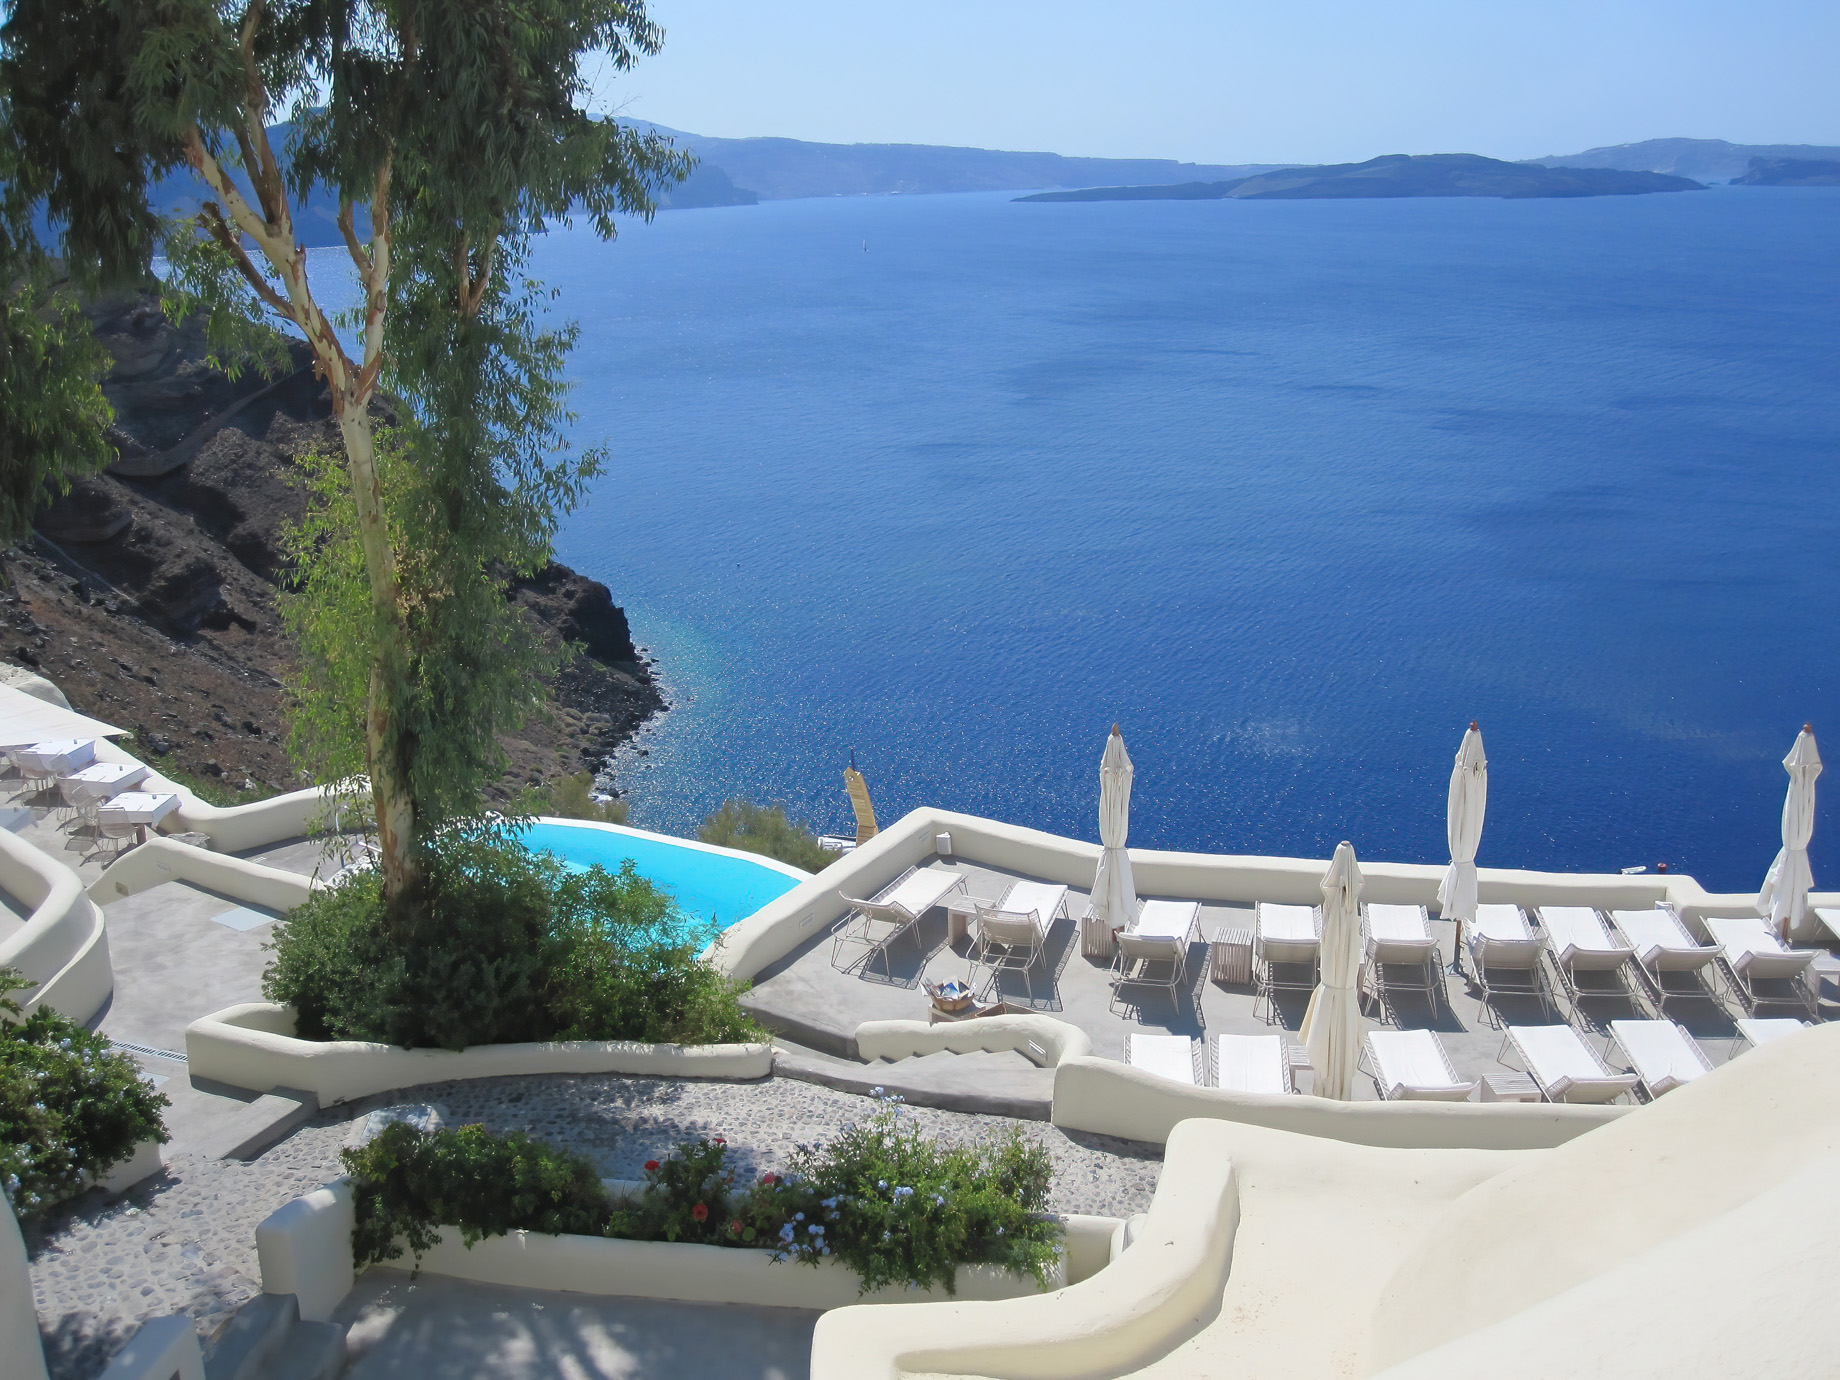 Mystique Hotel Santorini – Oia, Santorini Island, Greece – Mystique Ocean View Pool Deck